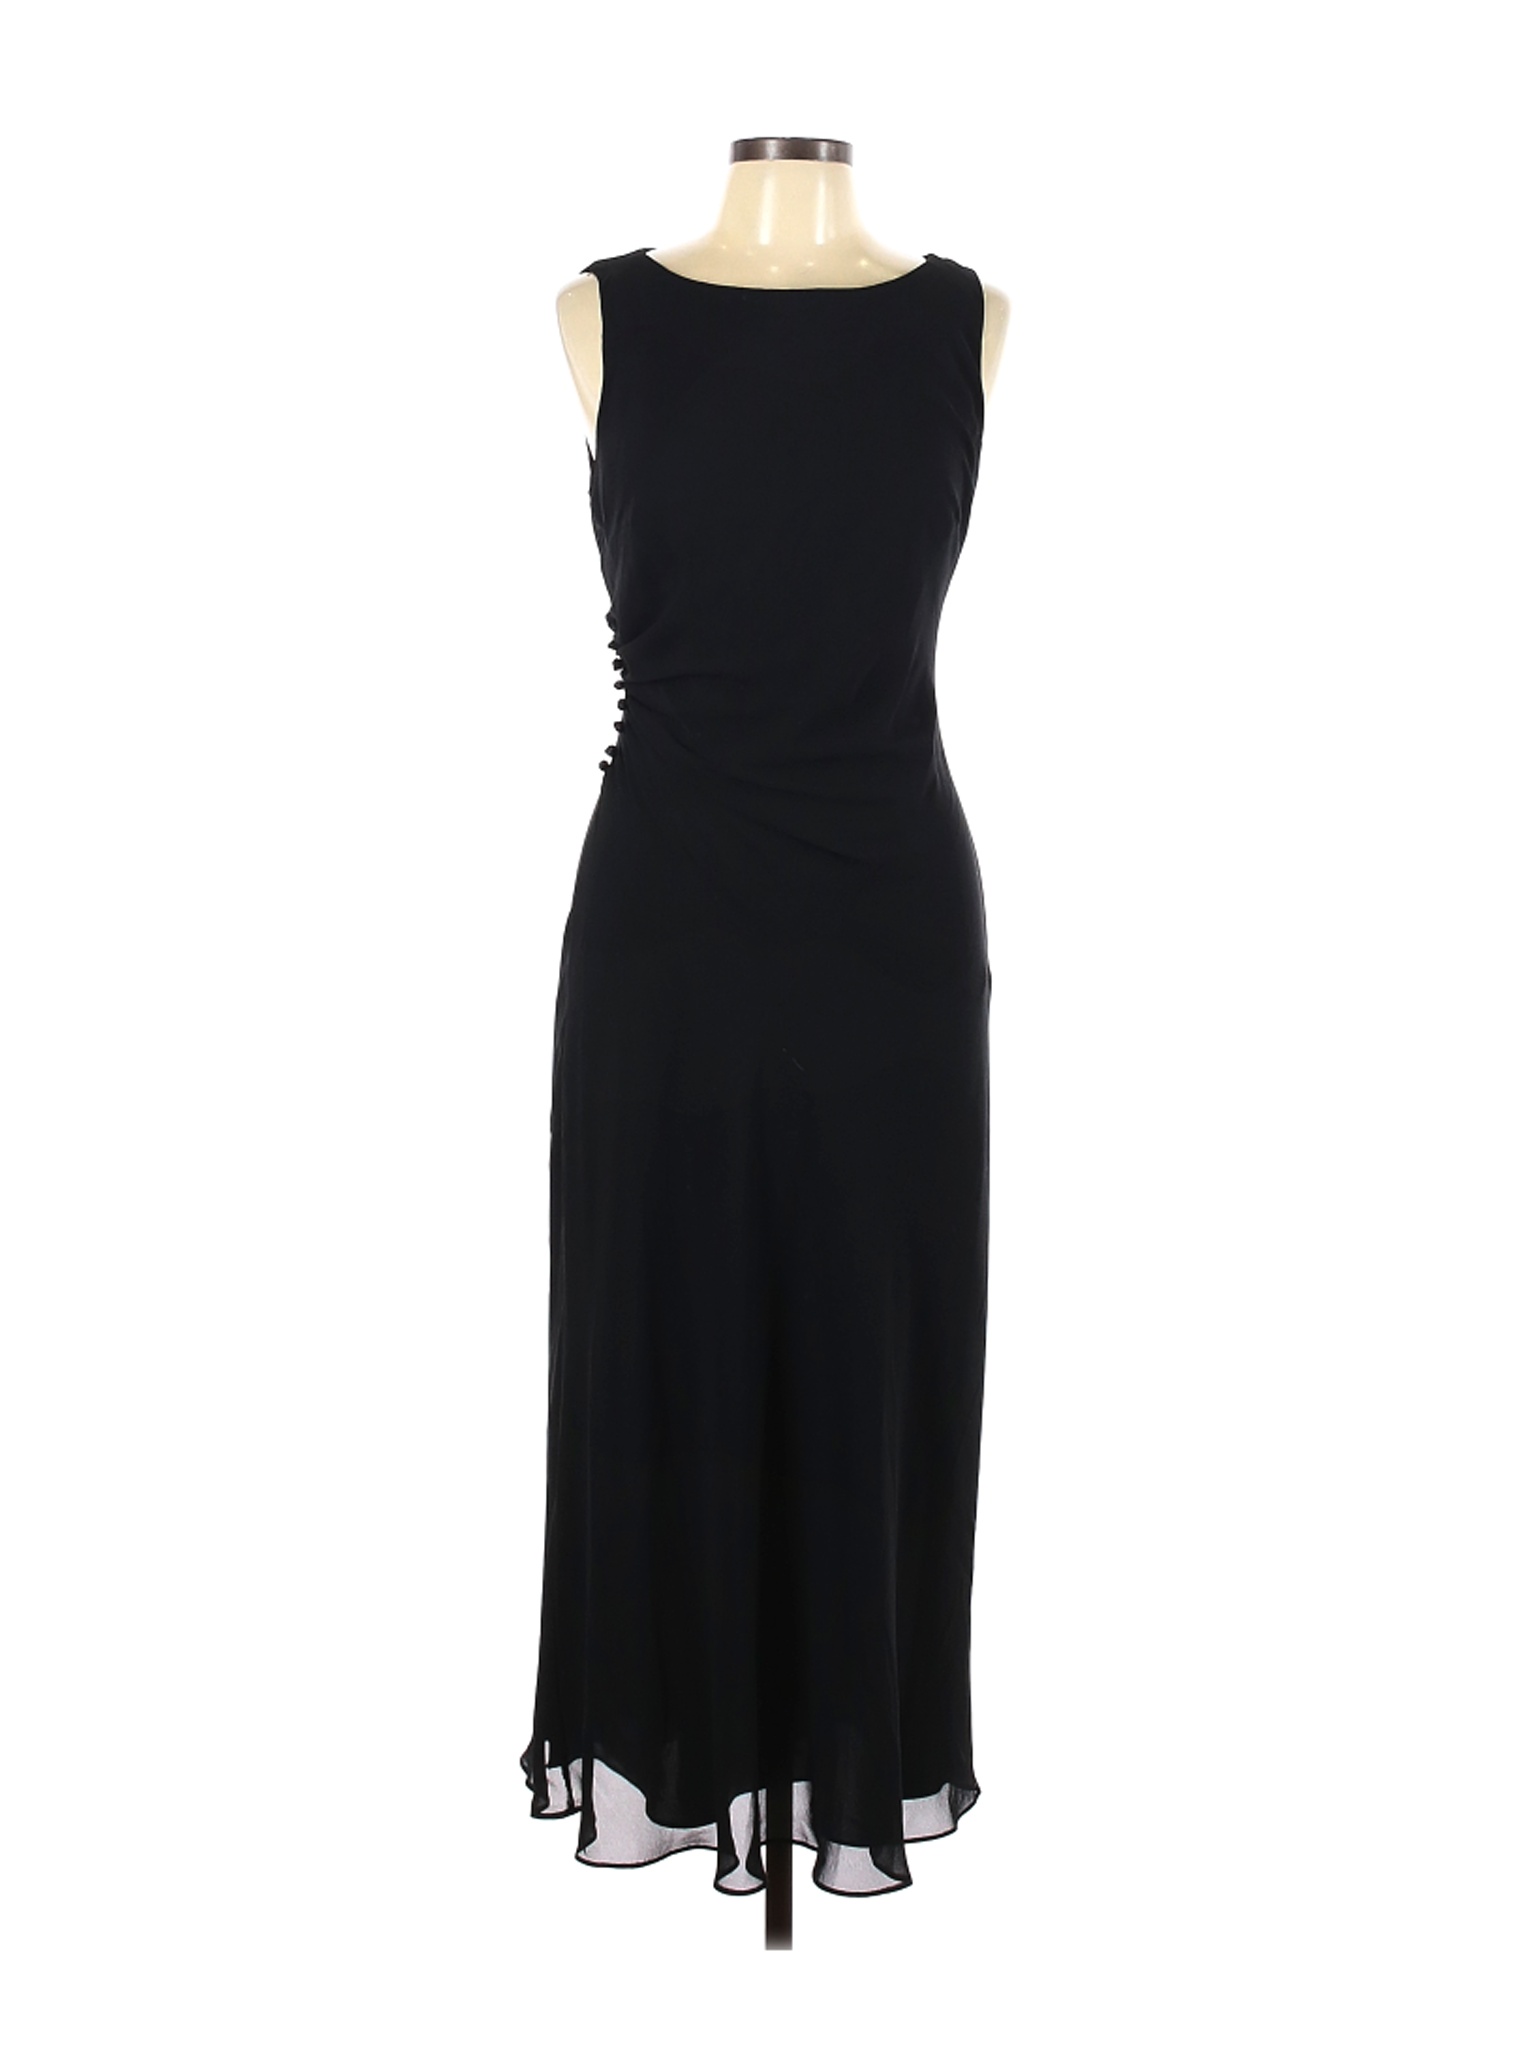 Liz Claiborne Women Black Cocktail Dress 10 Ebay 